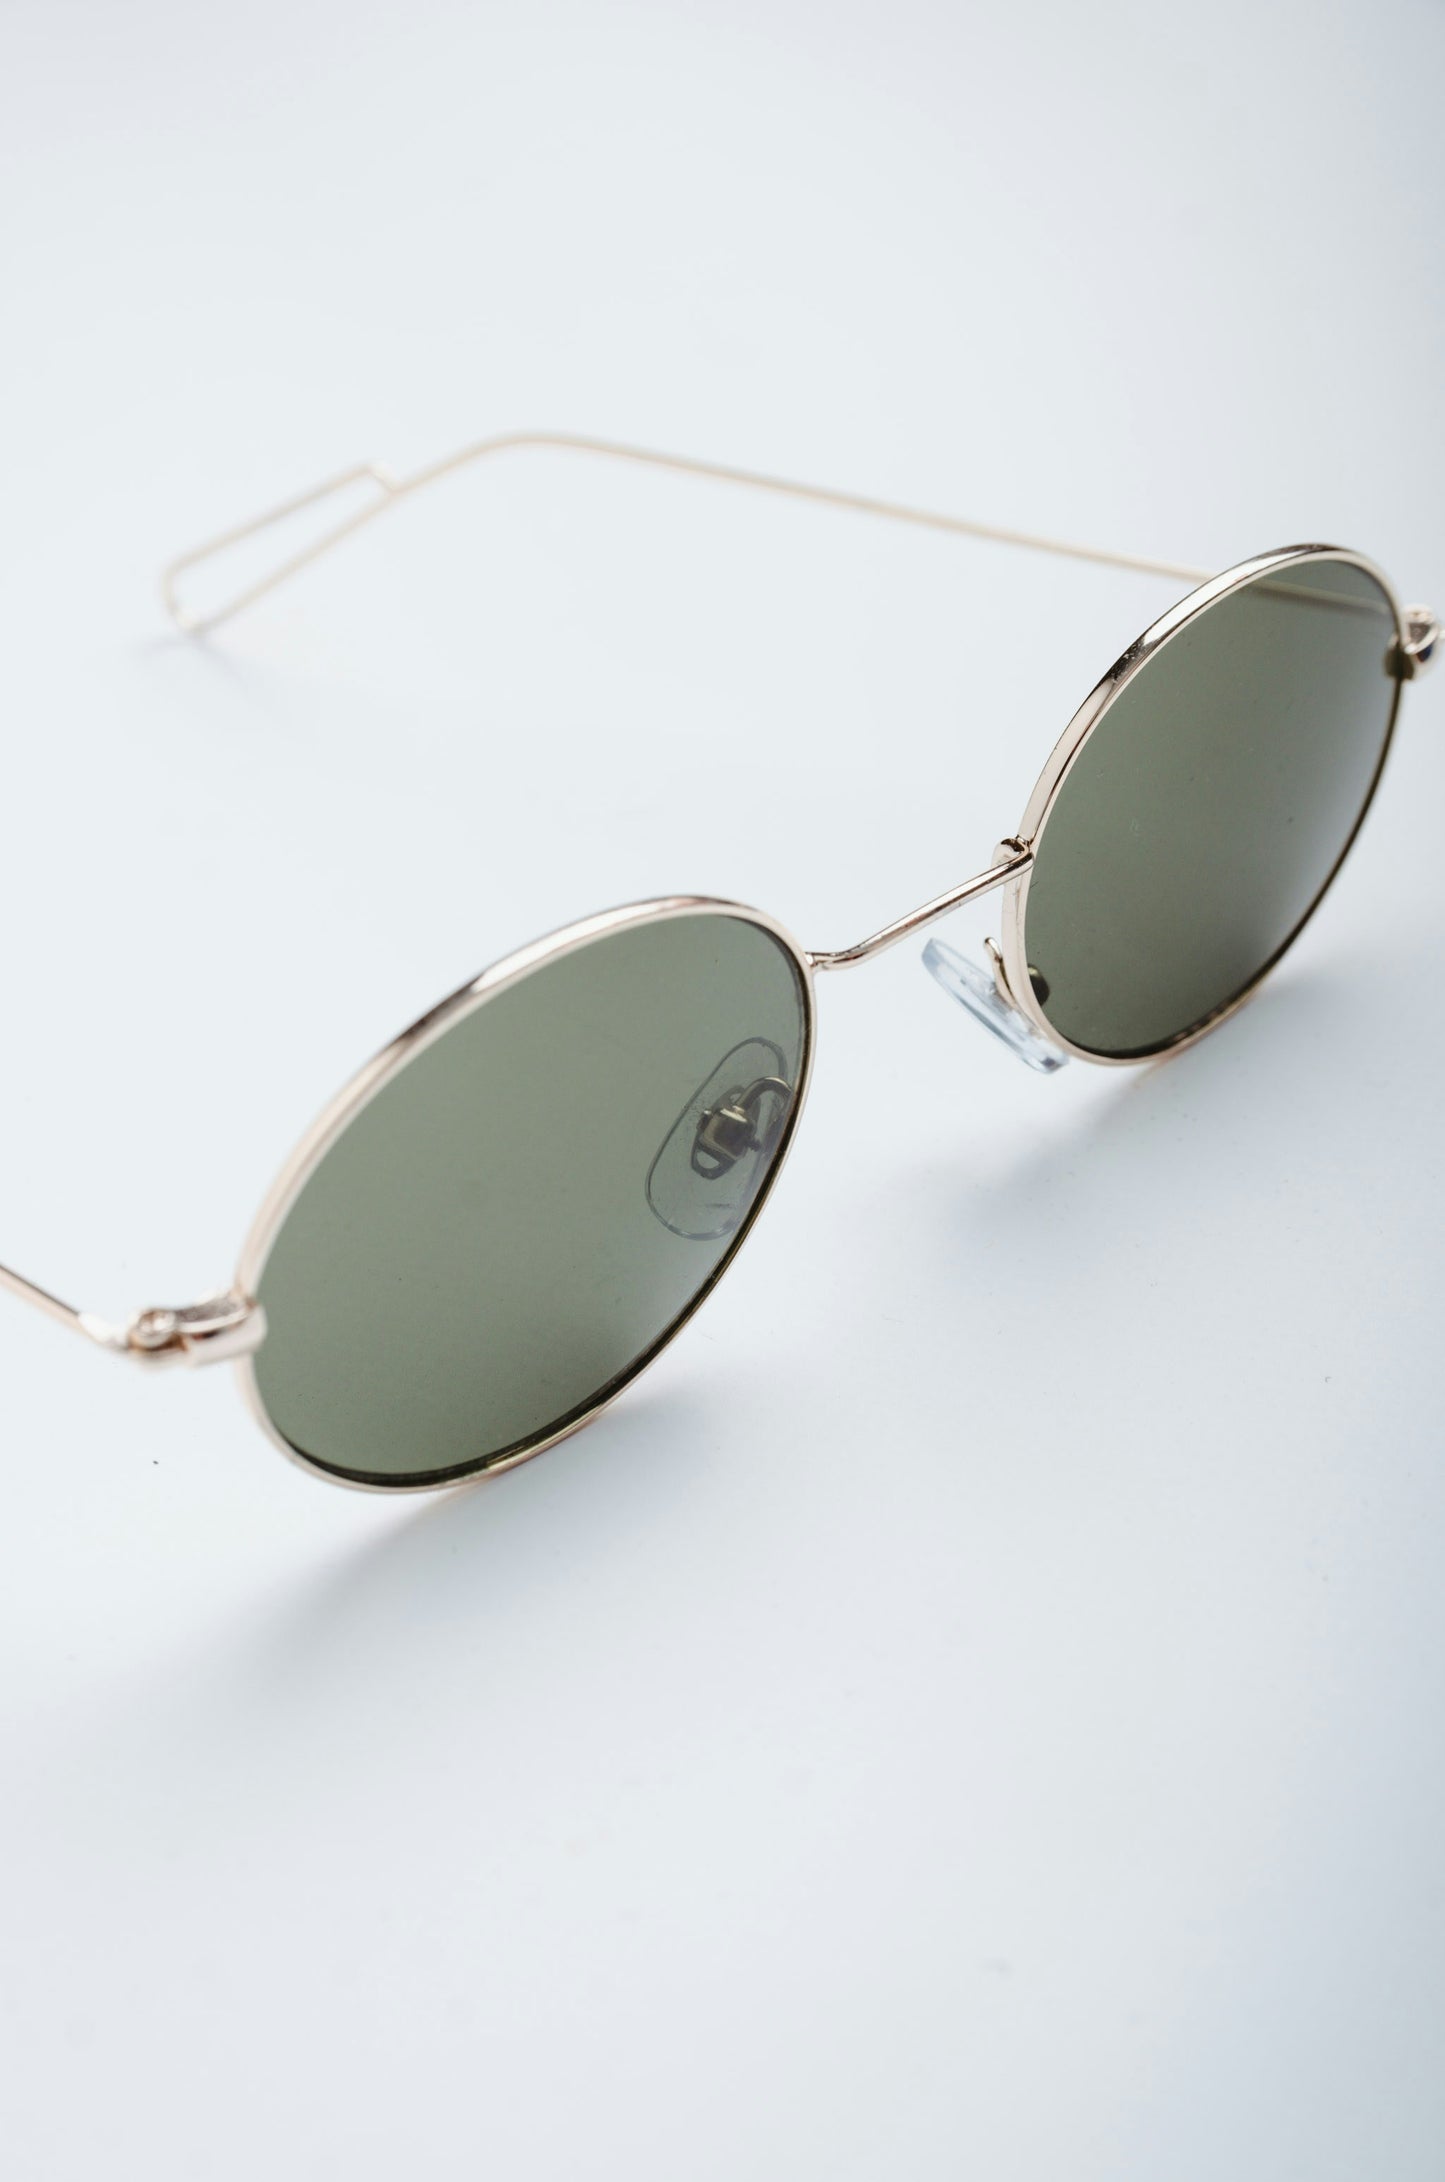 Sample SunGlasses